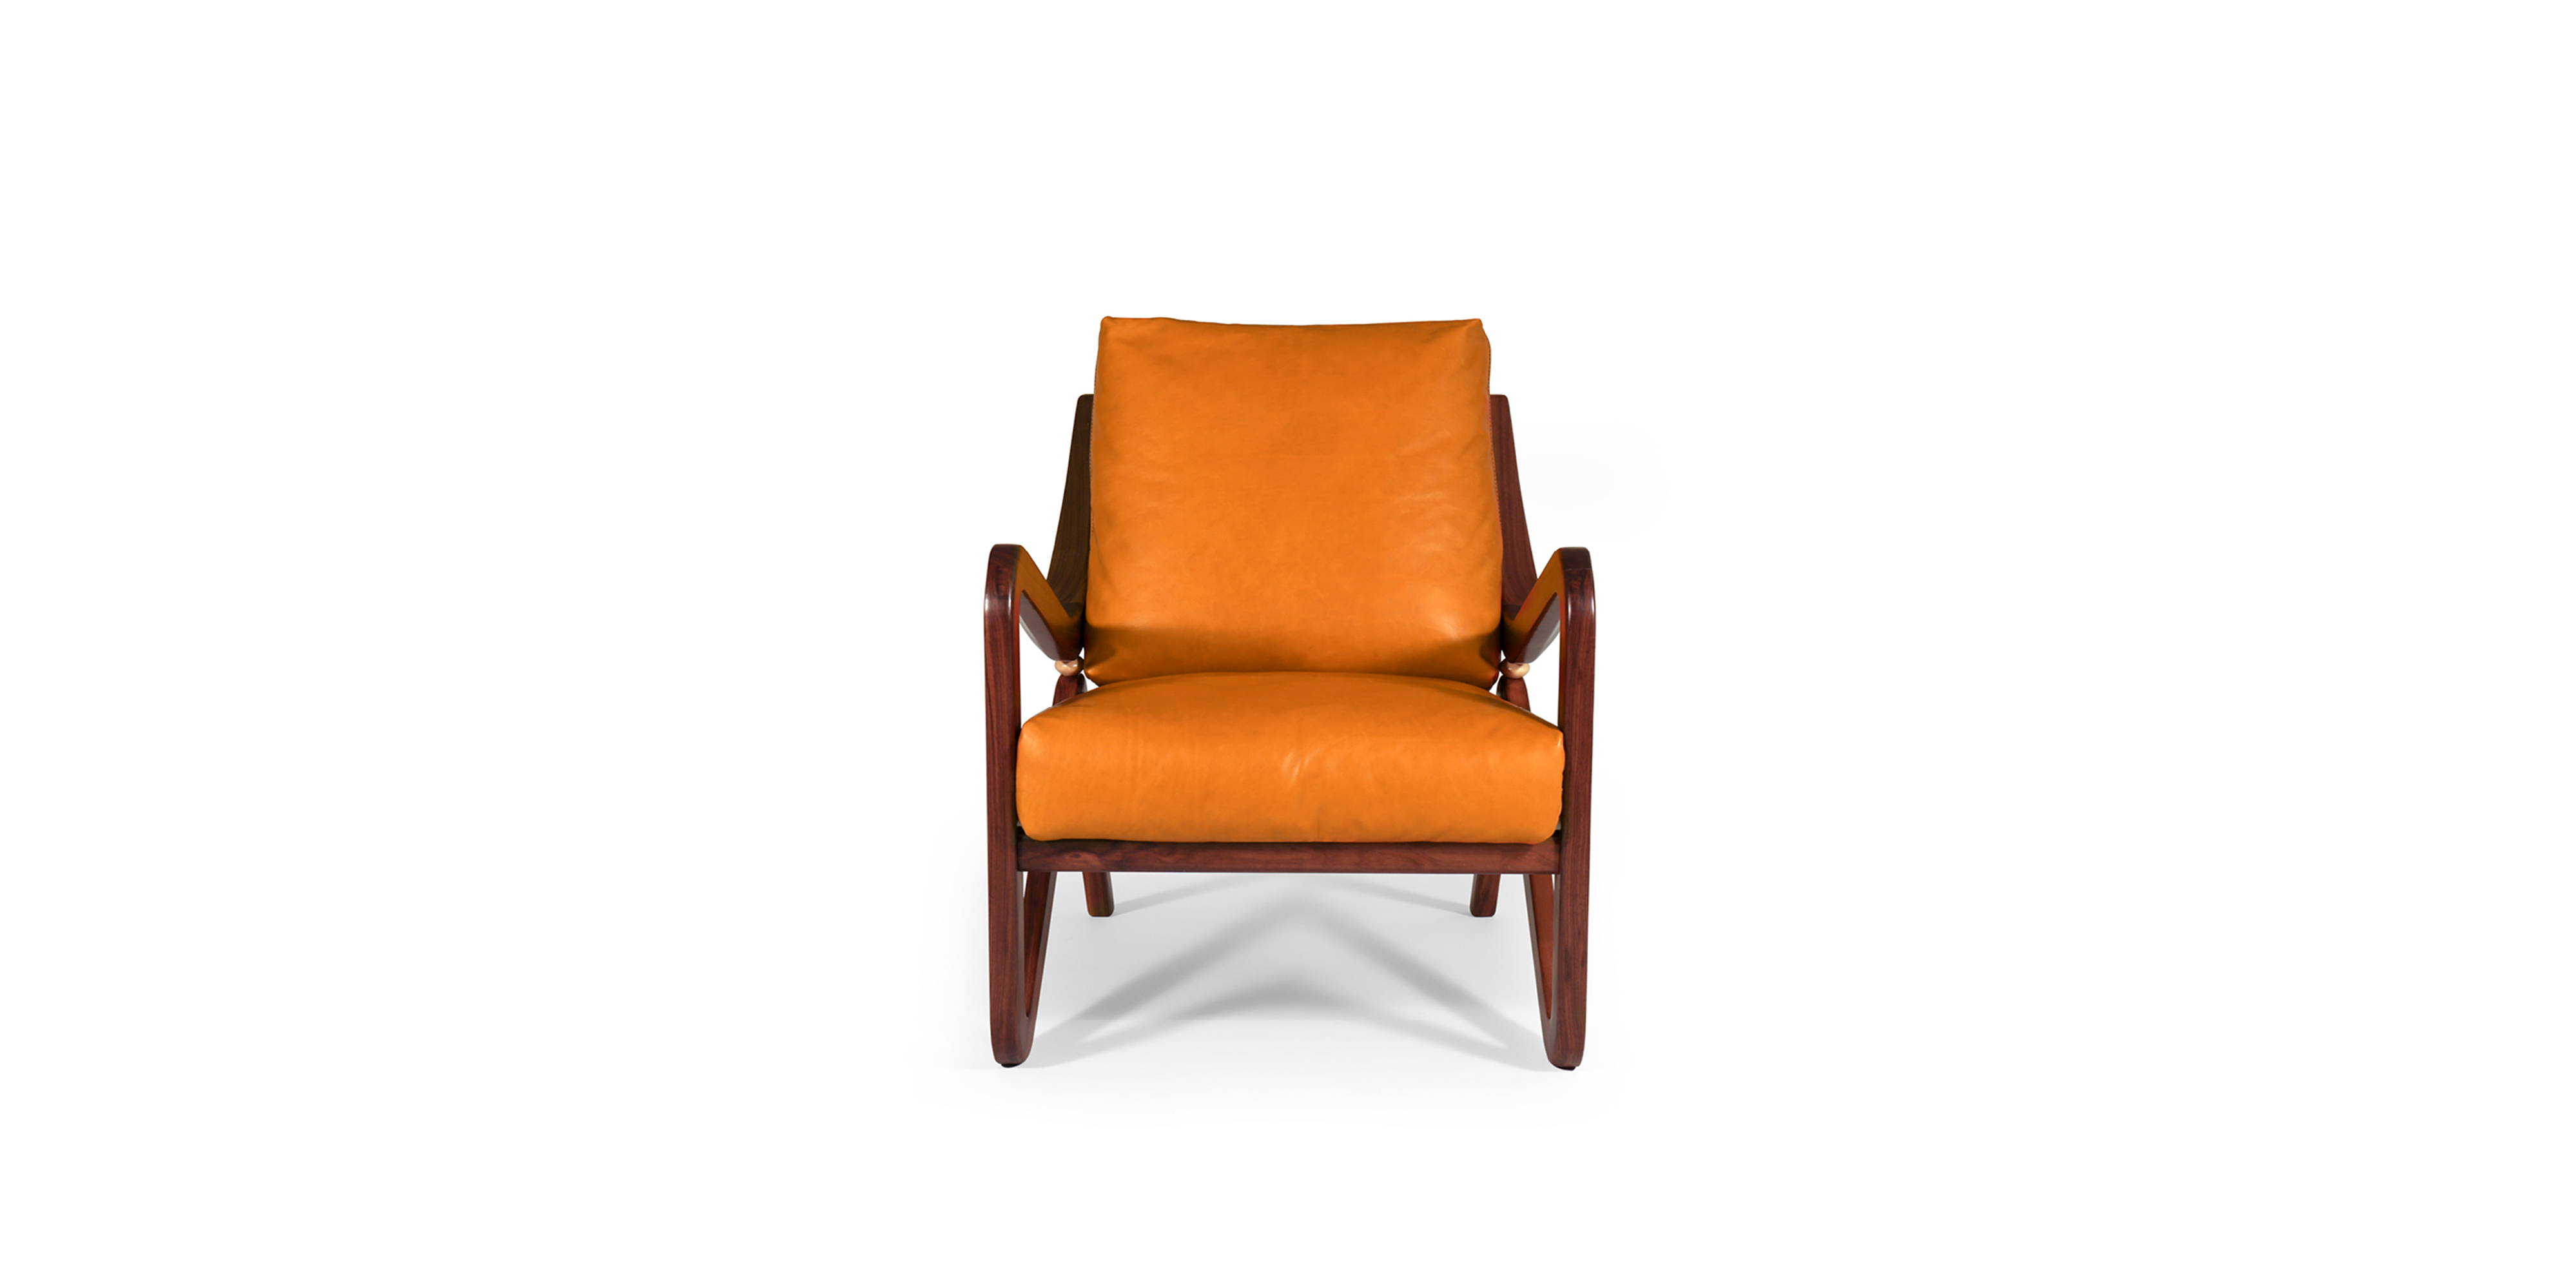 classic armchair designs